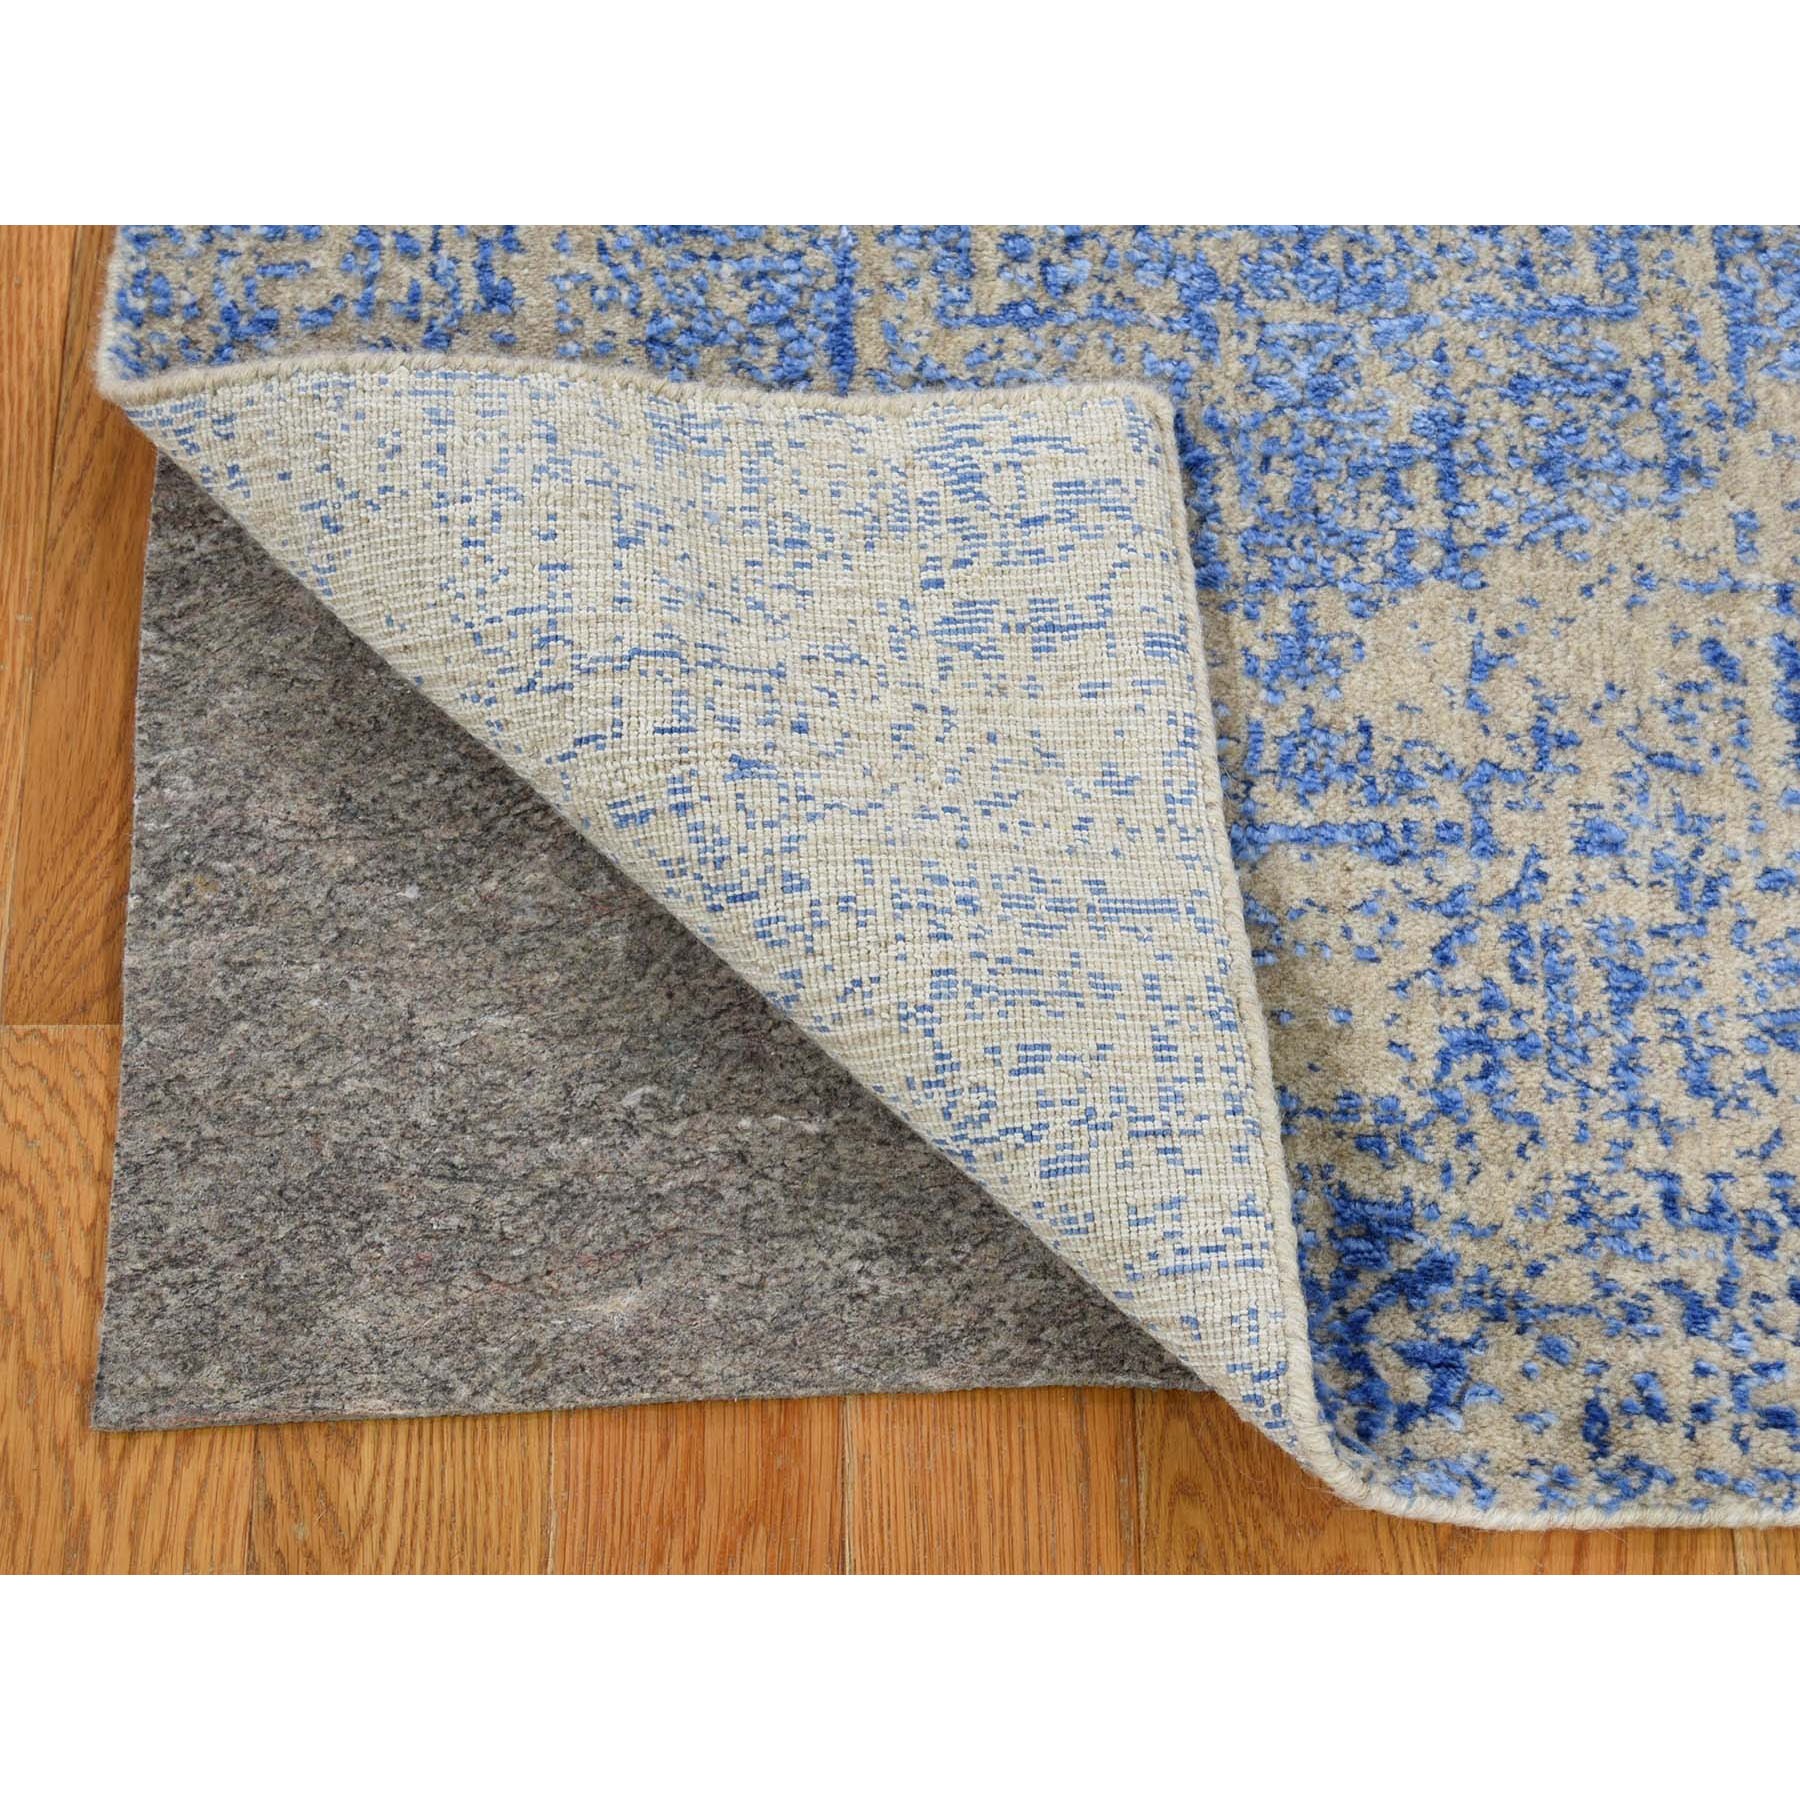 2-5 x10- Wool And Silk Mamluk Design Jacquard Hand Loomed Runner Oriental Rug 